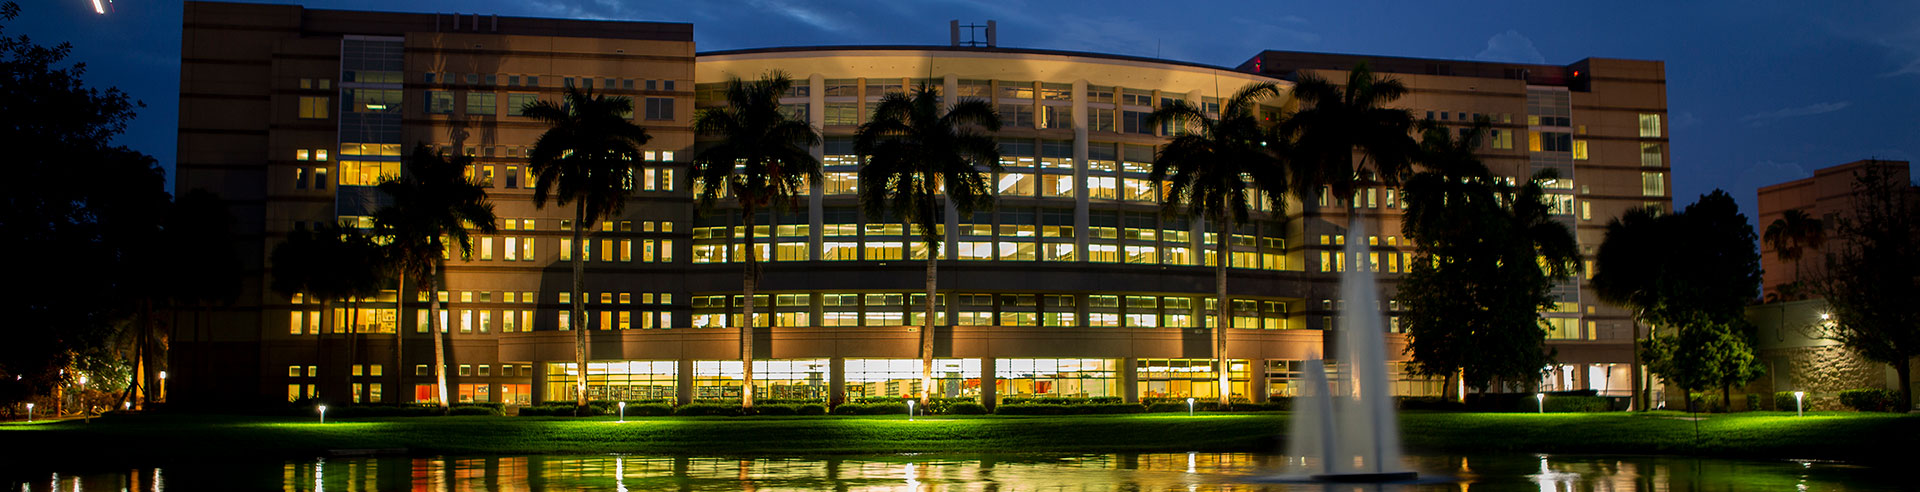 photo of nsu campus at night